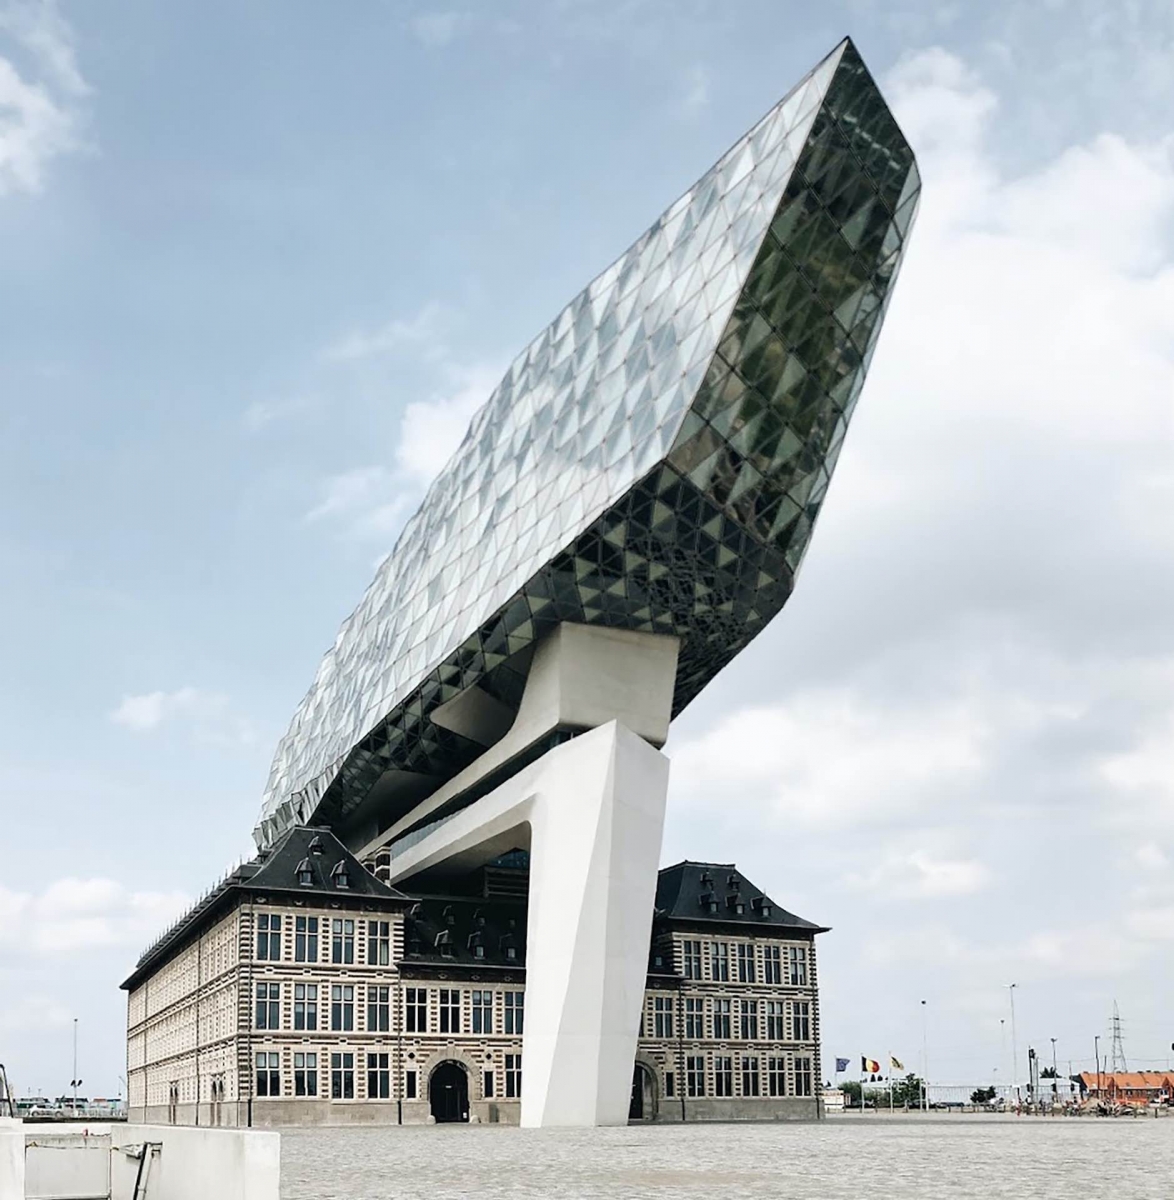 Antwerp Port House by Zaha Hadid Architects, Antwerp, Belgium